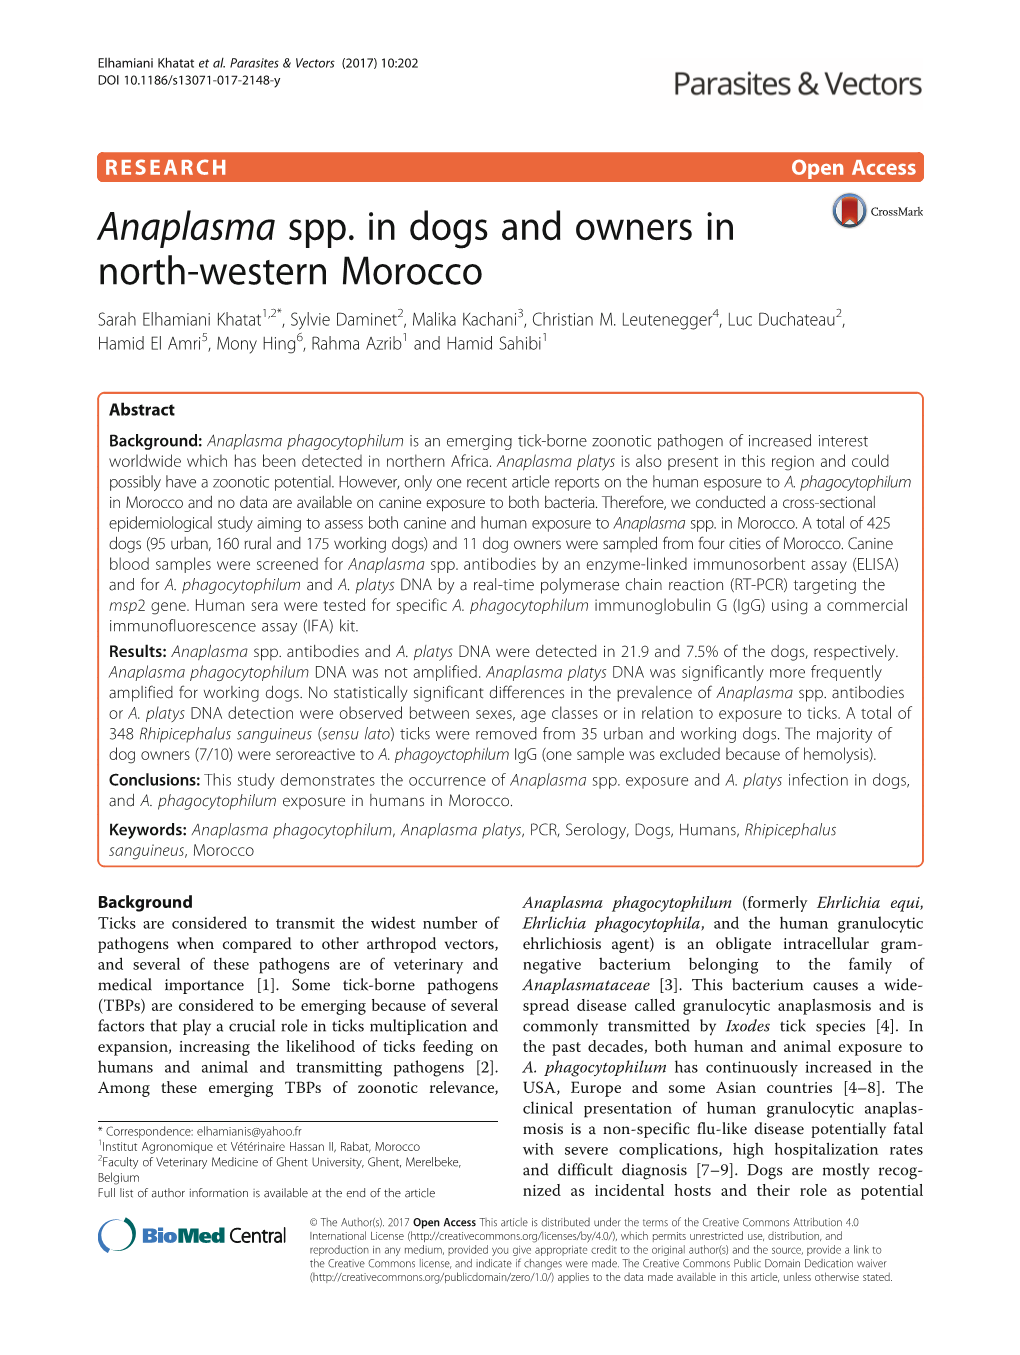 Anaplasma Spp. in Dogs and Owners in North-Western Morocco Sarah Elhamiani Khatat1,2*, Sylvie Daminet2, Malika Kachani3, Christian M